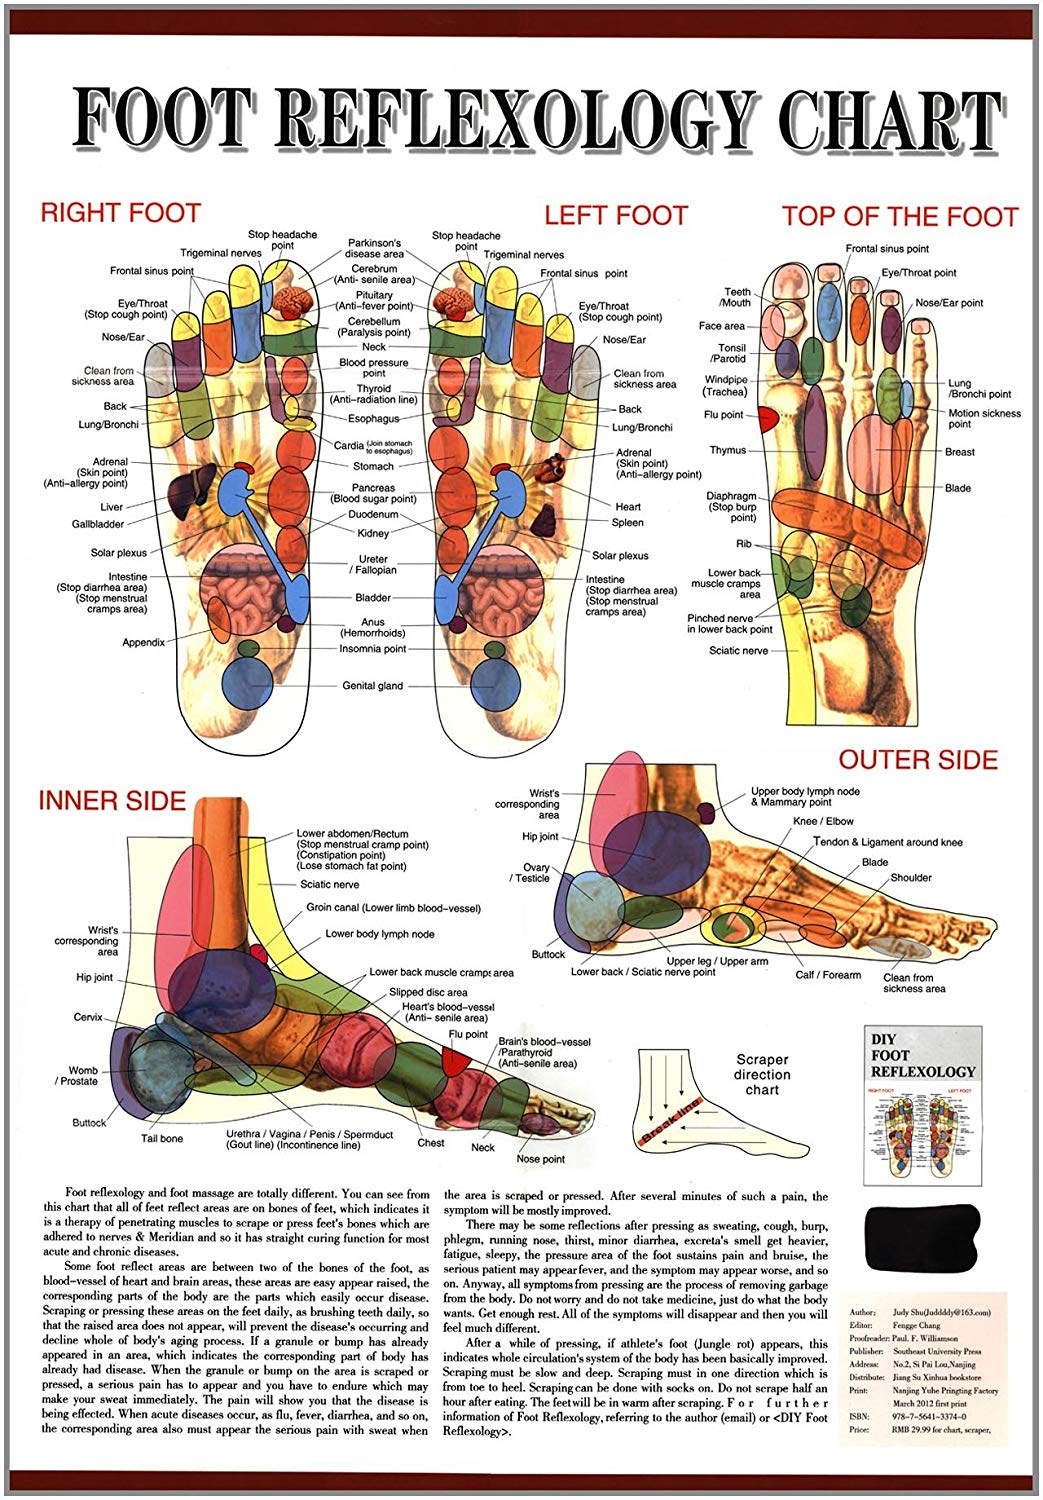 Foot Reflexology Chart Laminated: Science Kits: Amazon.